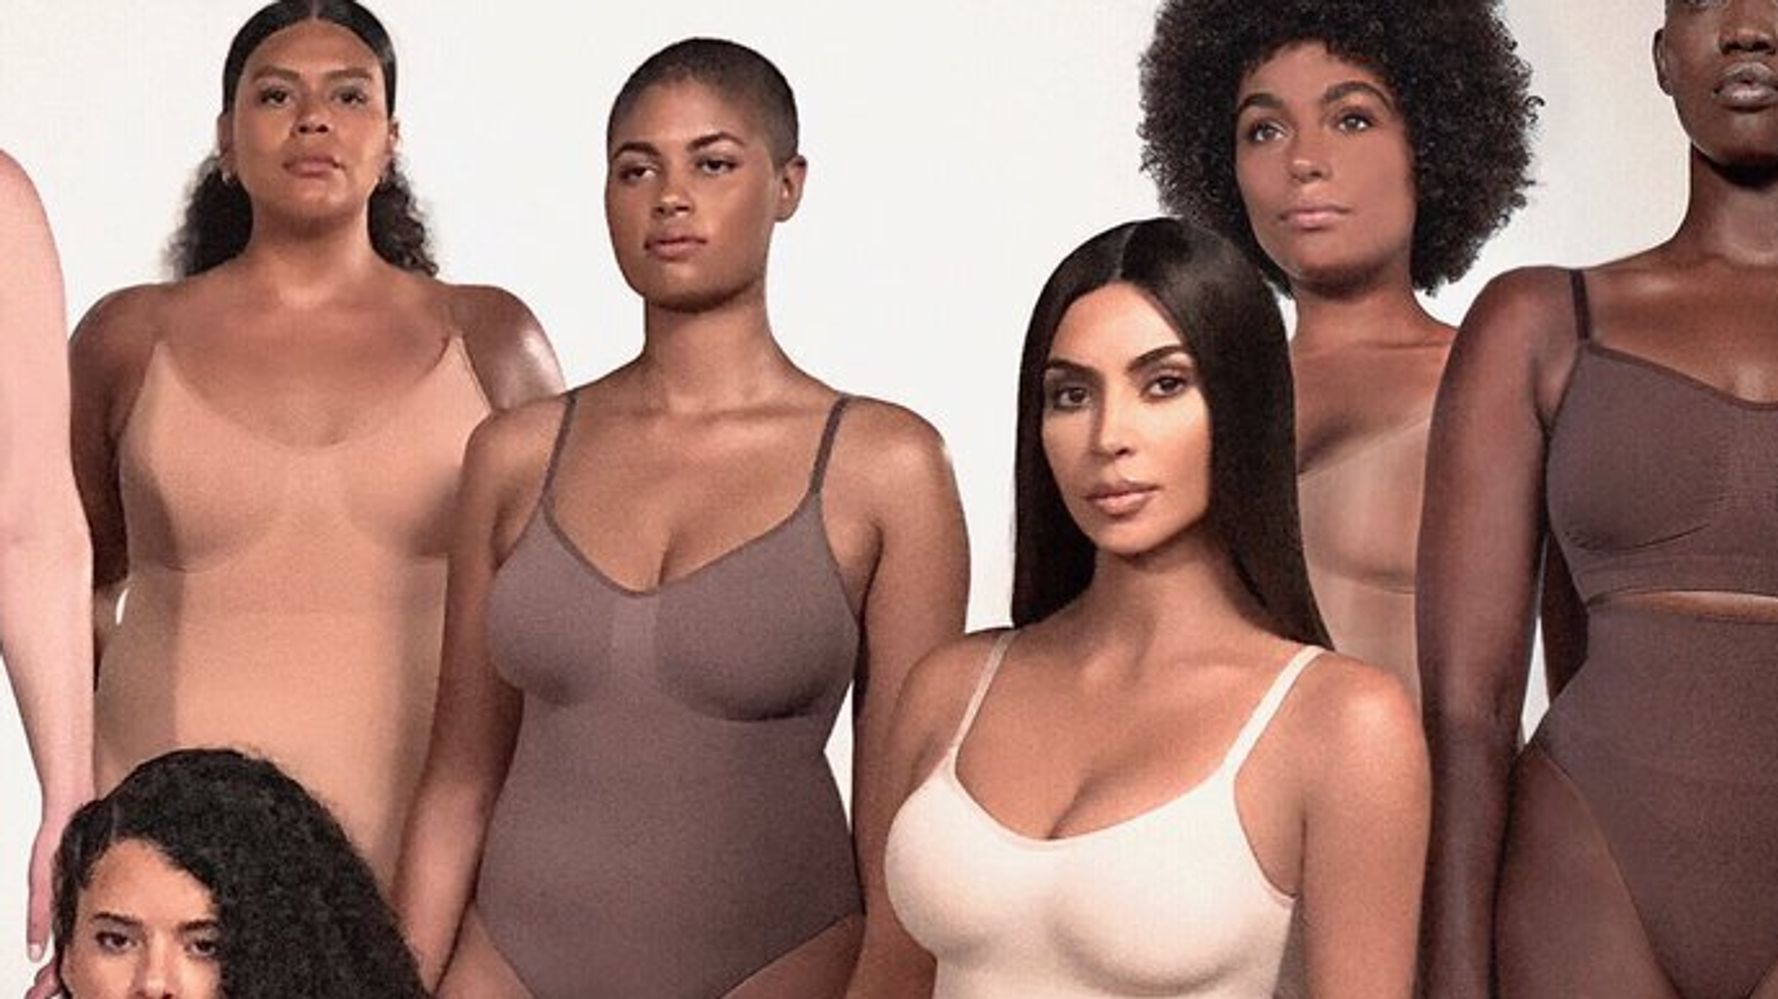 Accused of cultural appropriation, Kardashian drops 'Kimono' brand